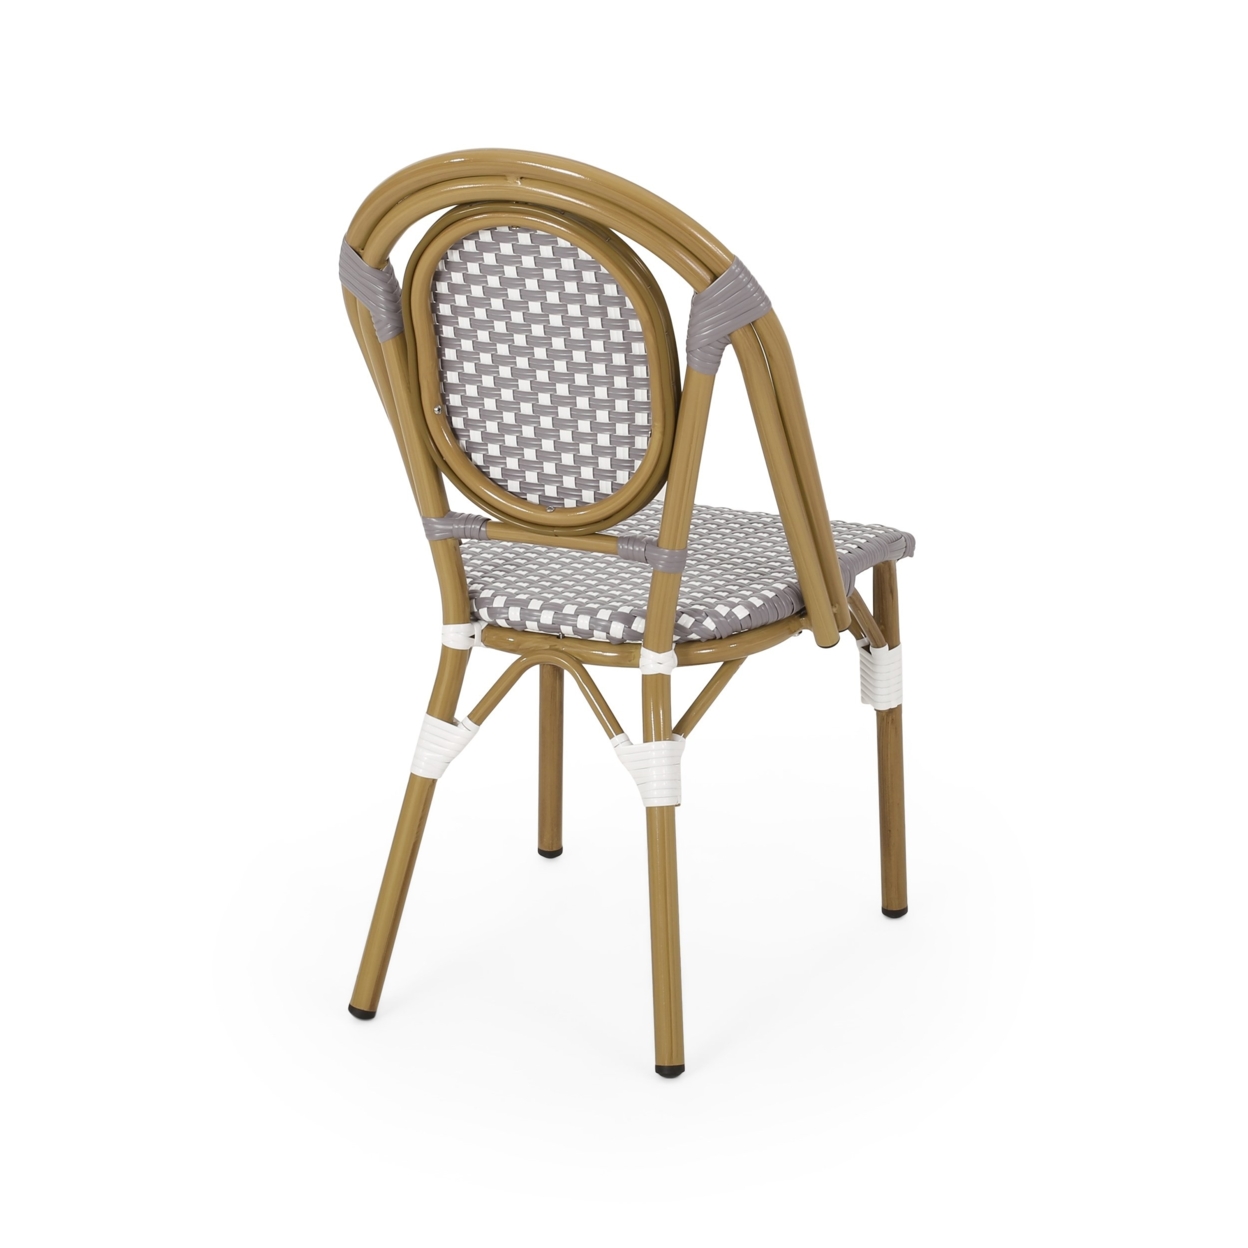 Kazaria Outdoor French Bistro Chairs (Set Of 4) - Gray